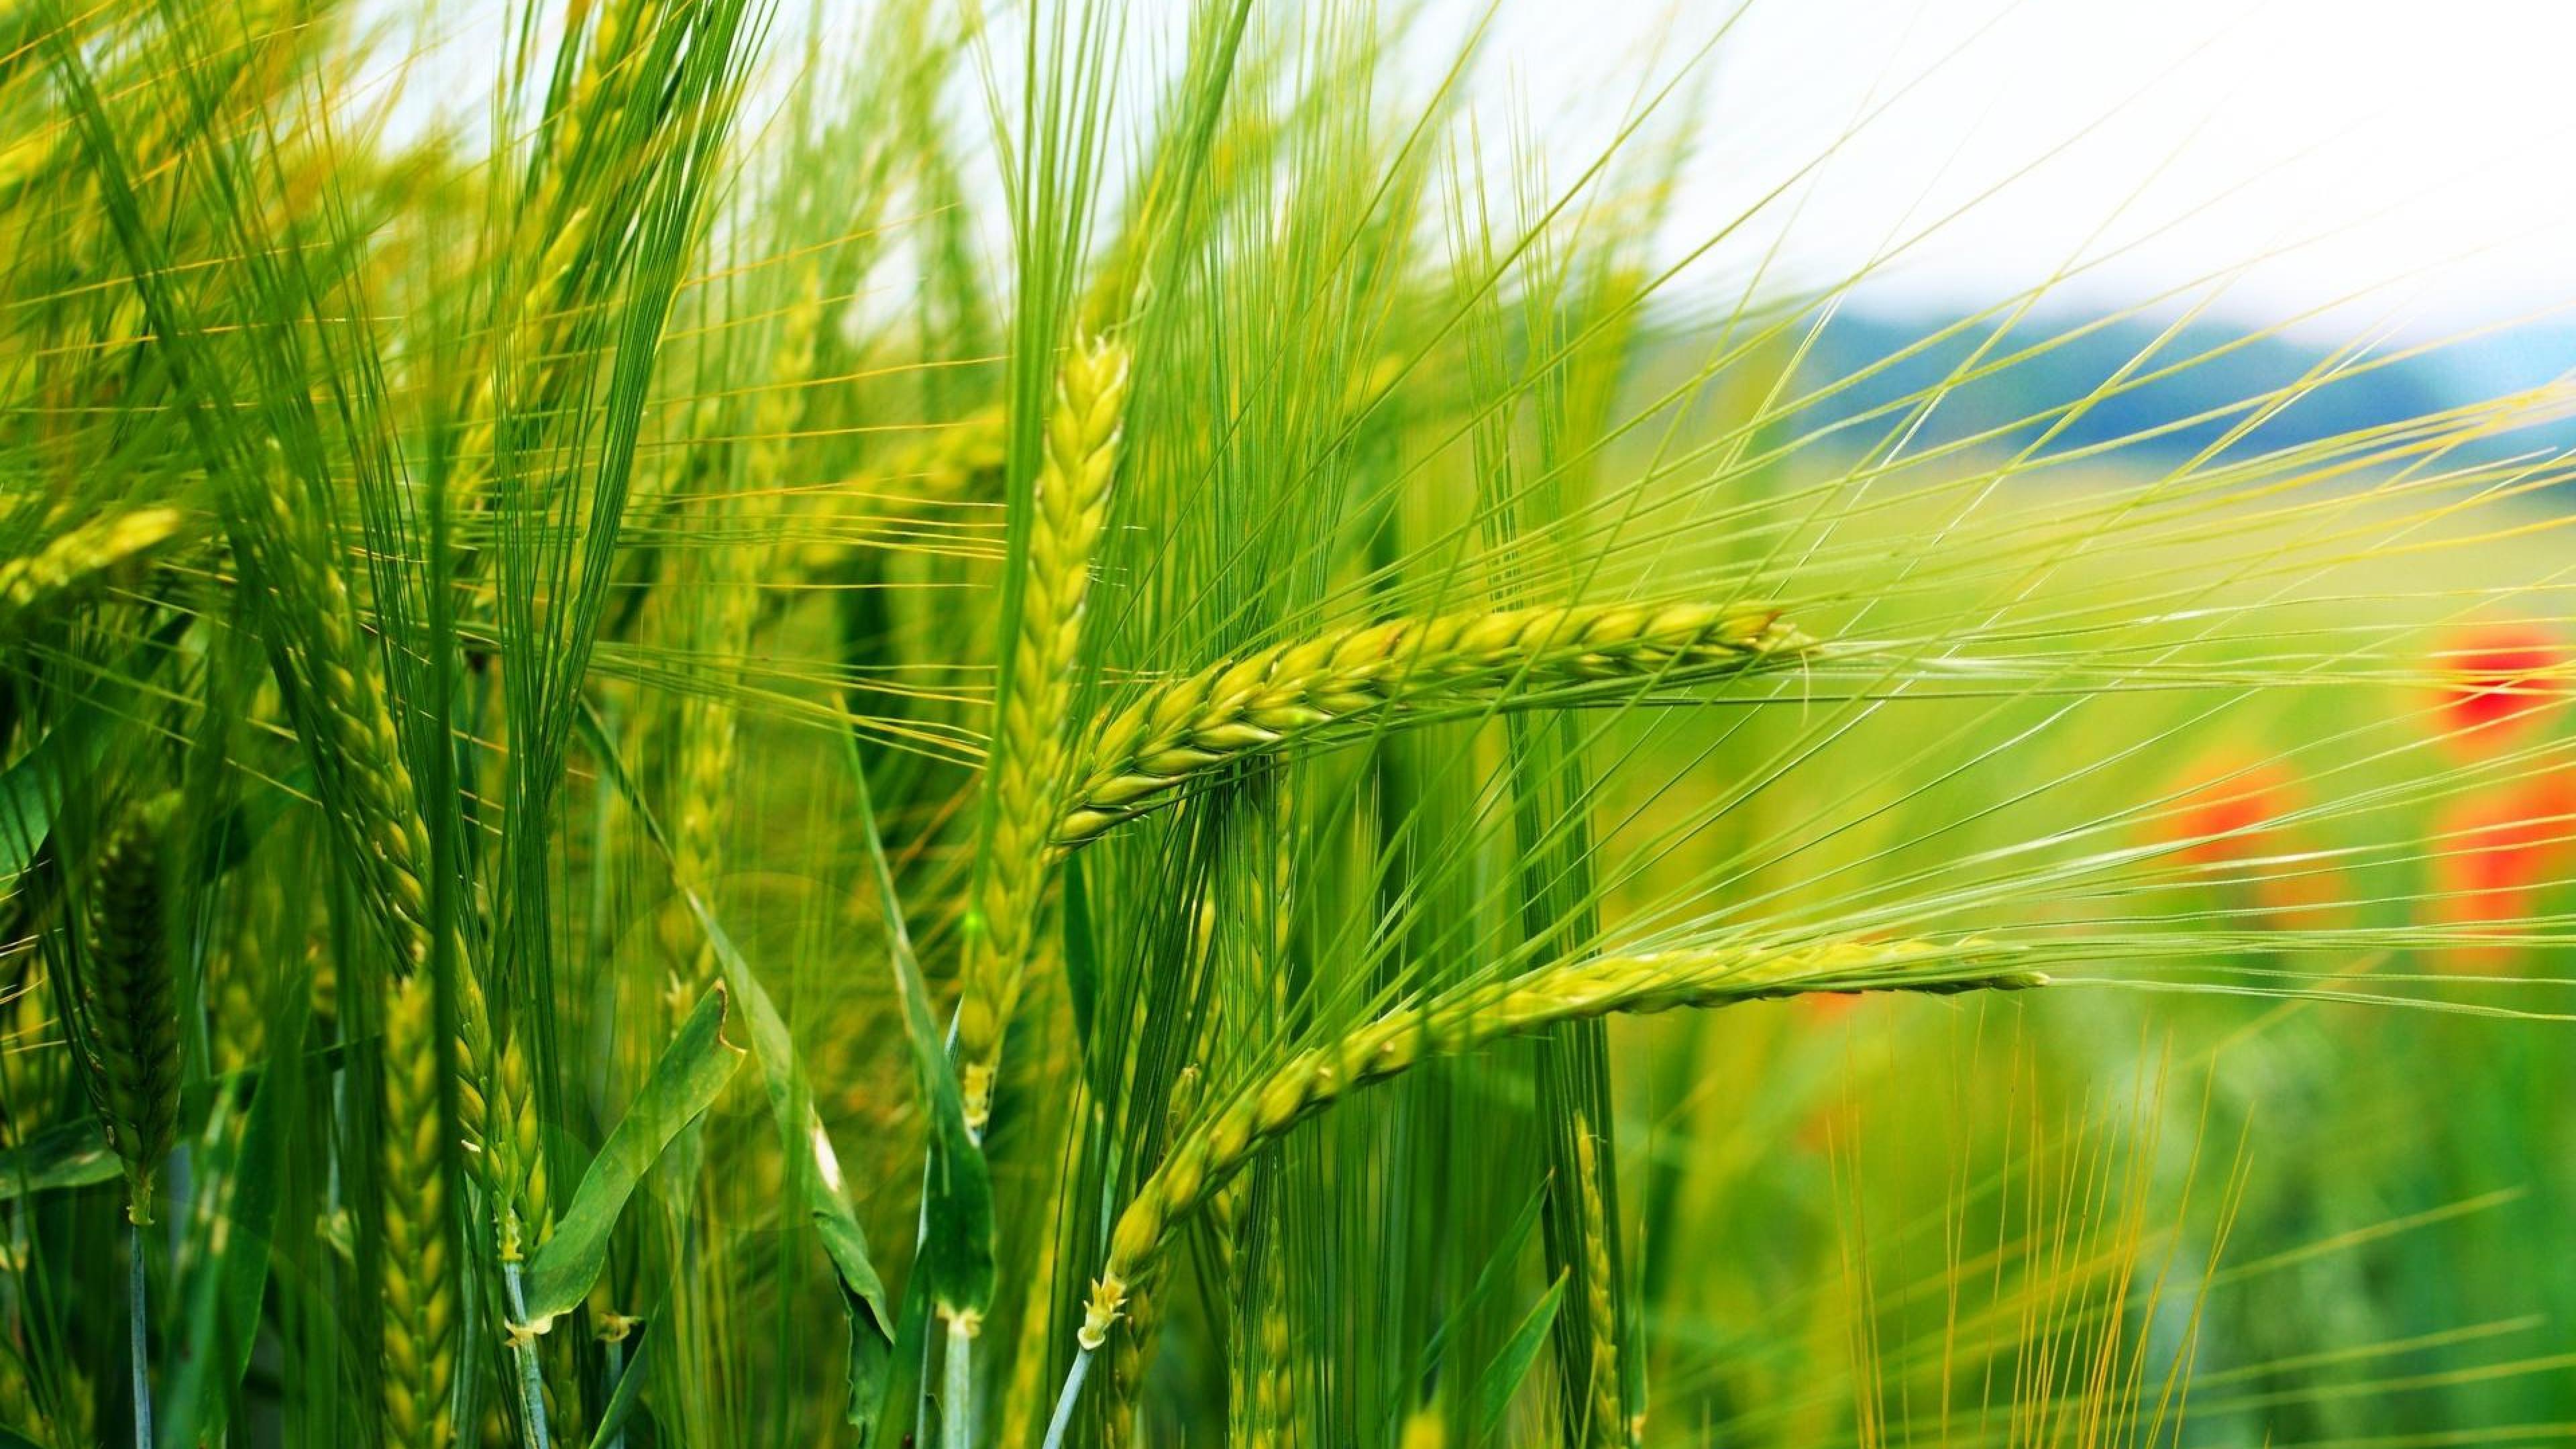 Wheat Nature Green wheat HD Wallpapers, Desktop Backgrounds